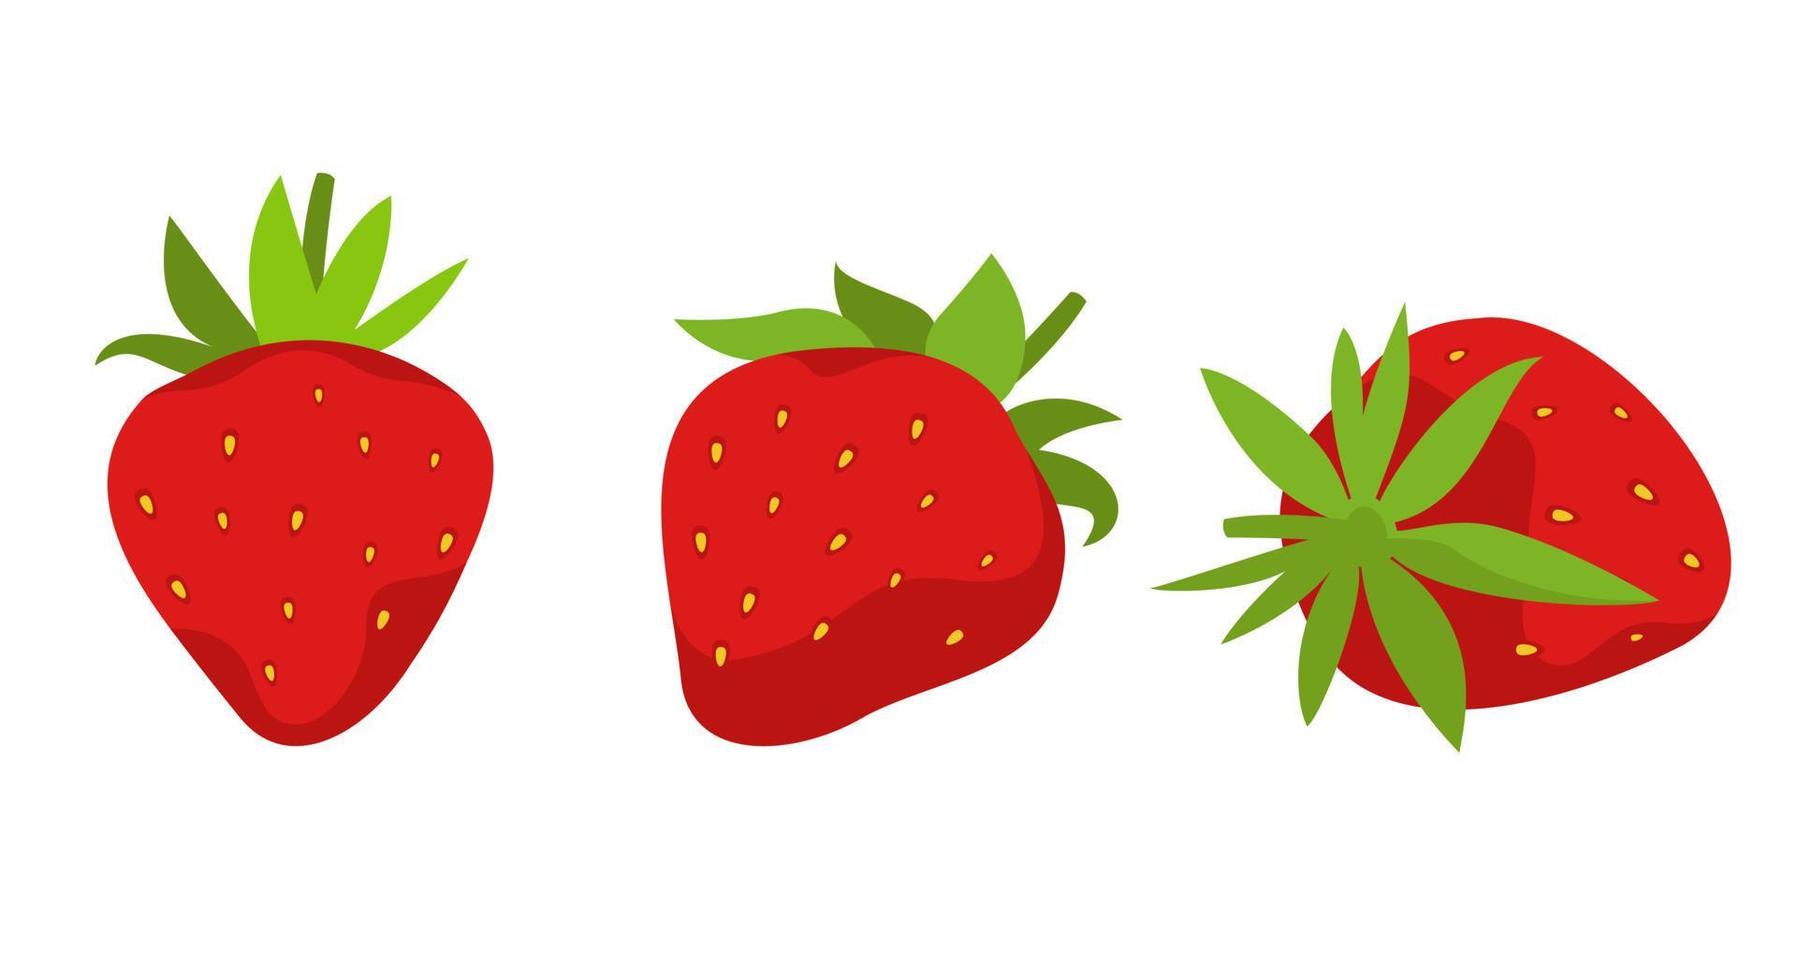 jordgubbe i olika vinklar. vektor